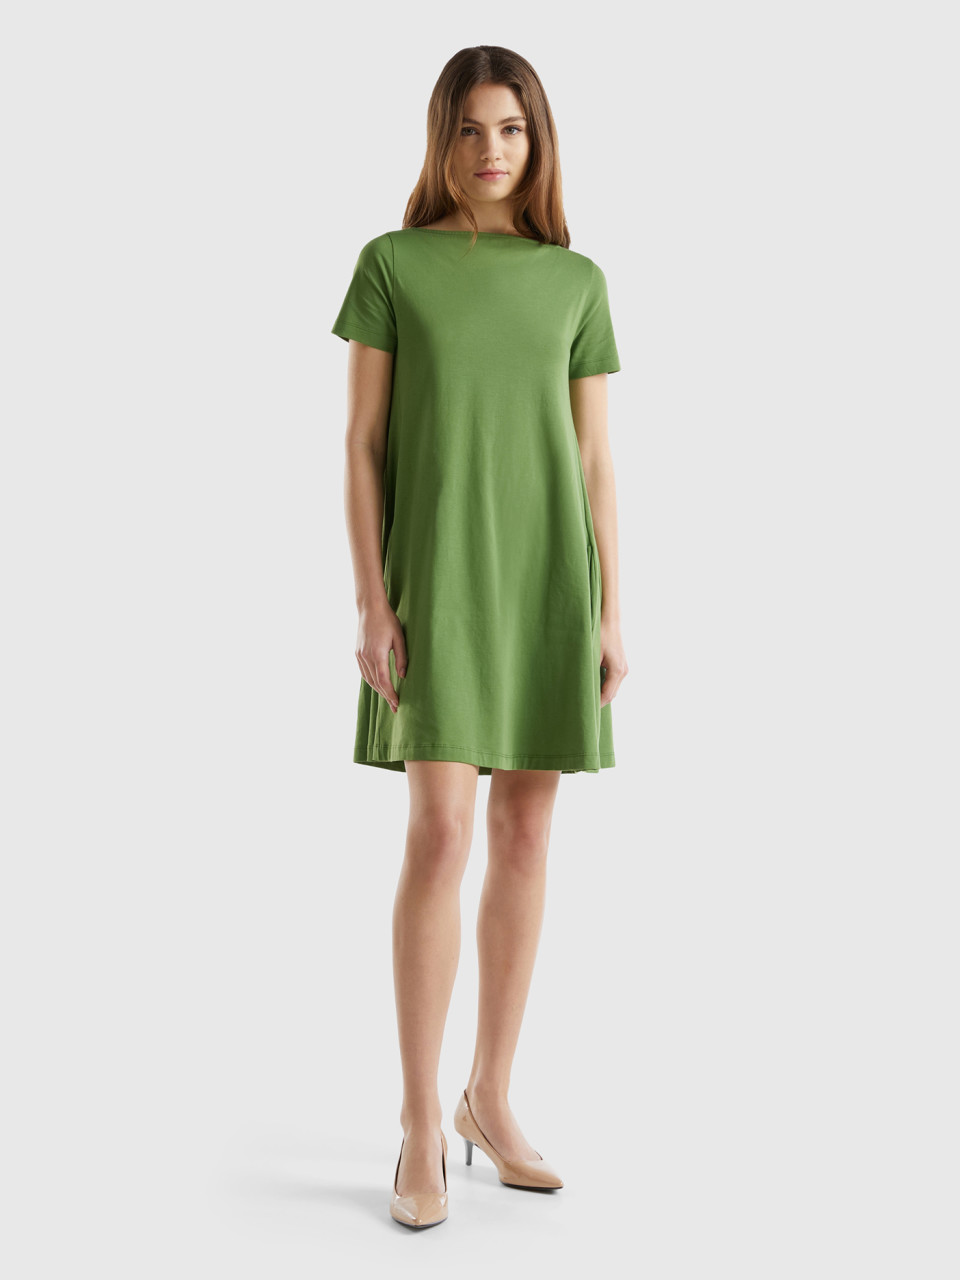 Benetton, Short Flared Dress, Military Green, Women